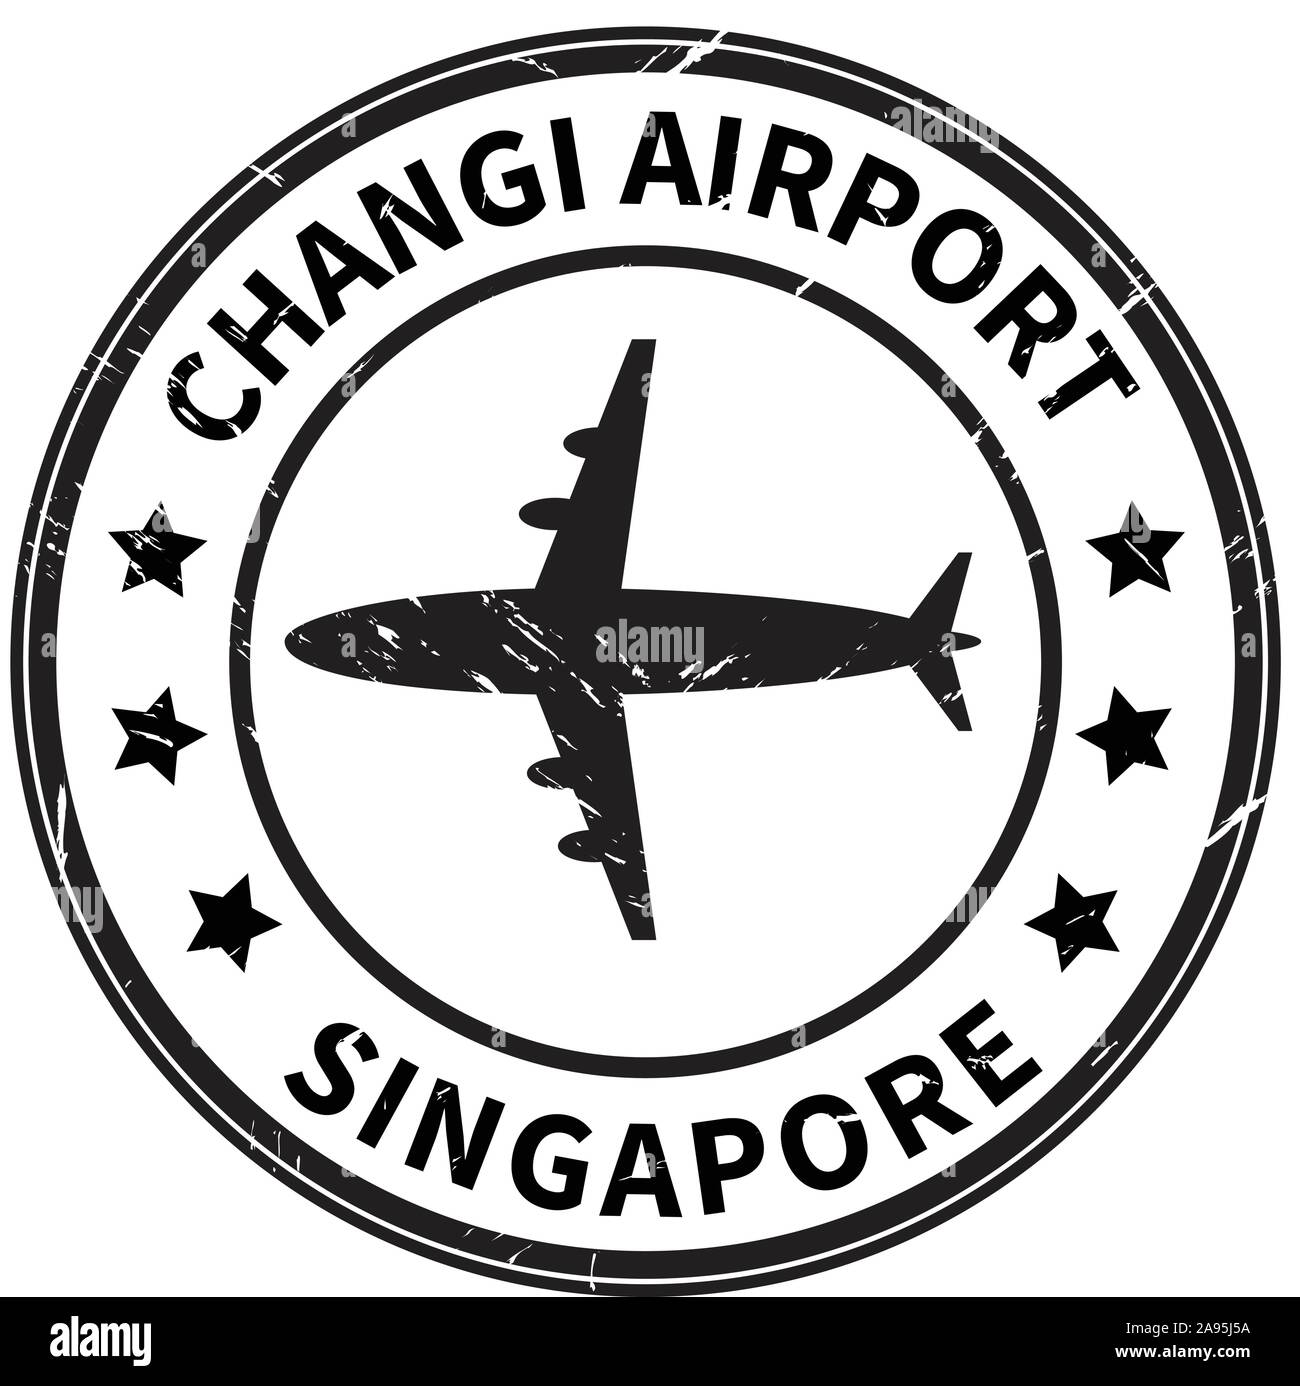 changi airport singapore stamp on white background. changi airport singapore logo. airport stamp sign. Singapore aerodrome symbol. Stock Vector